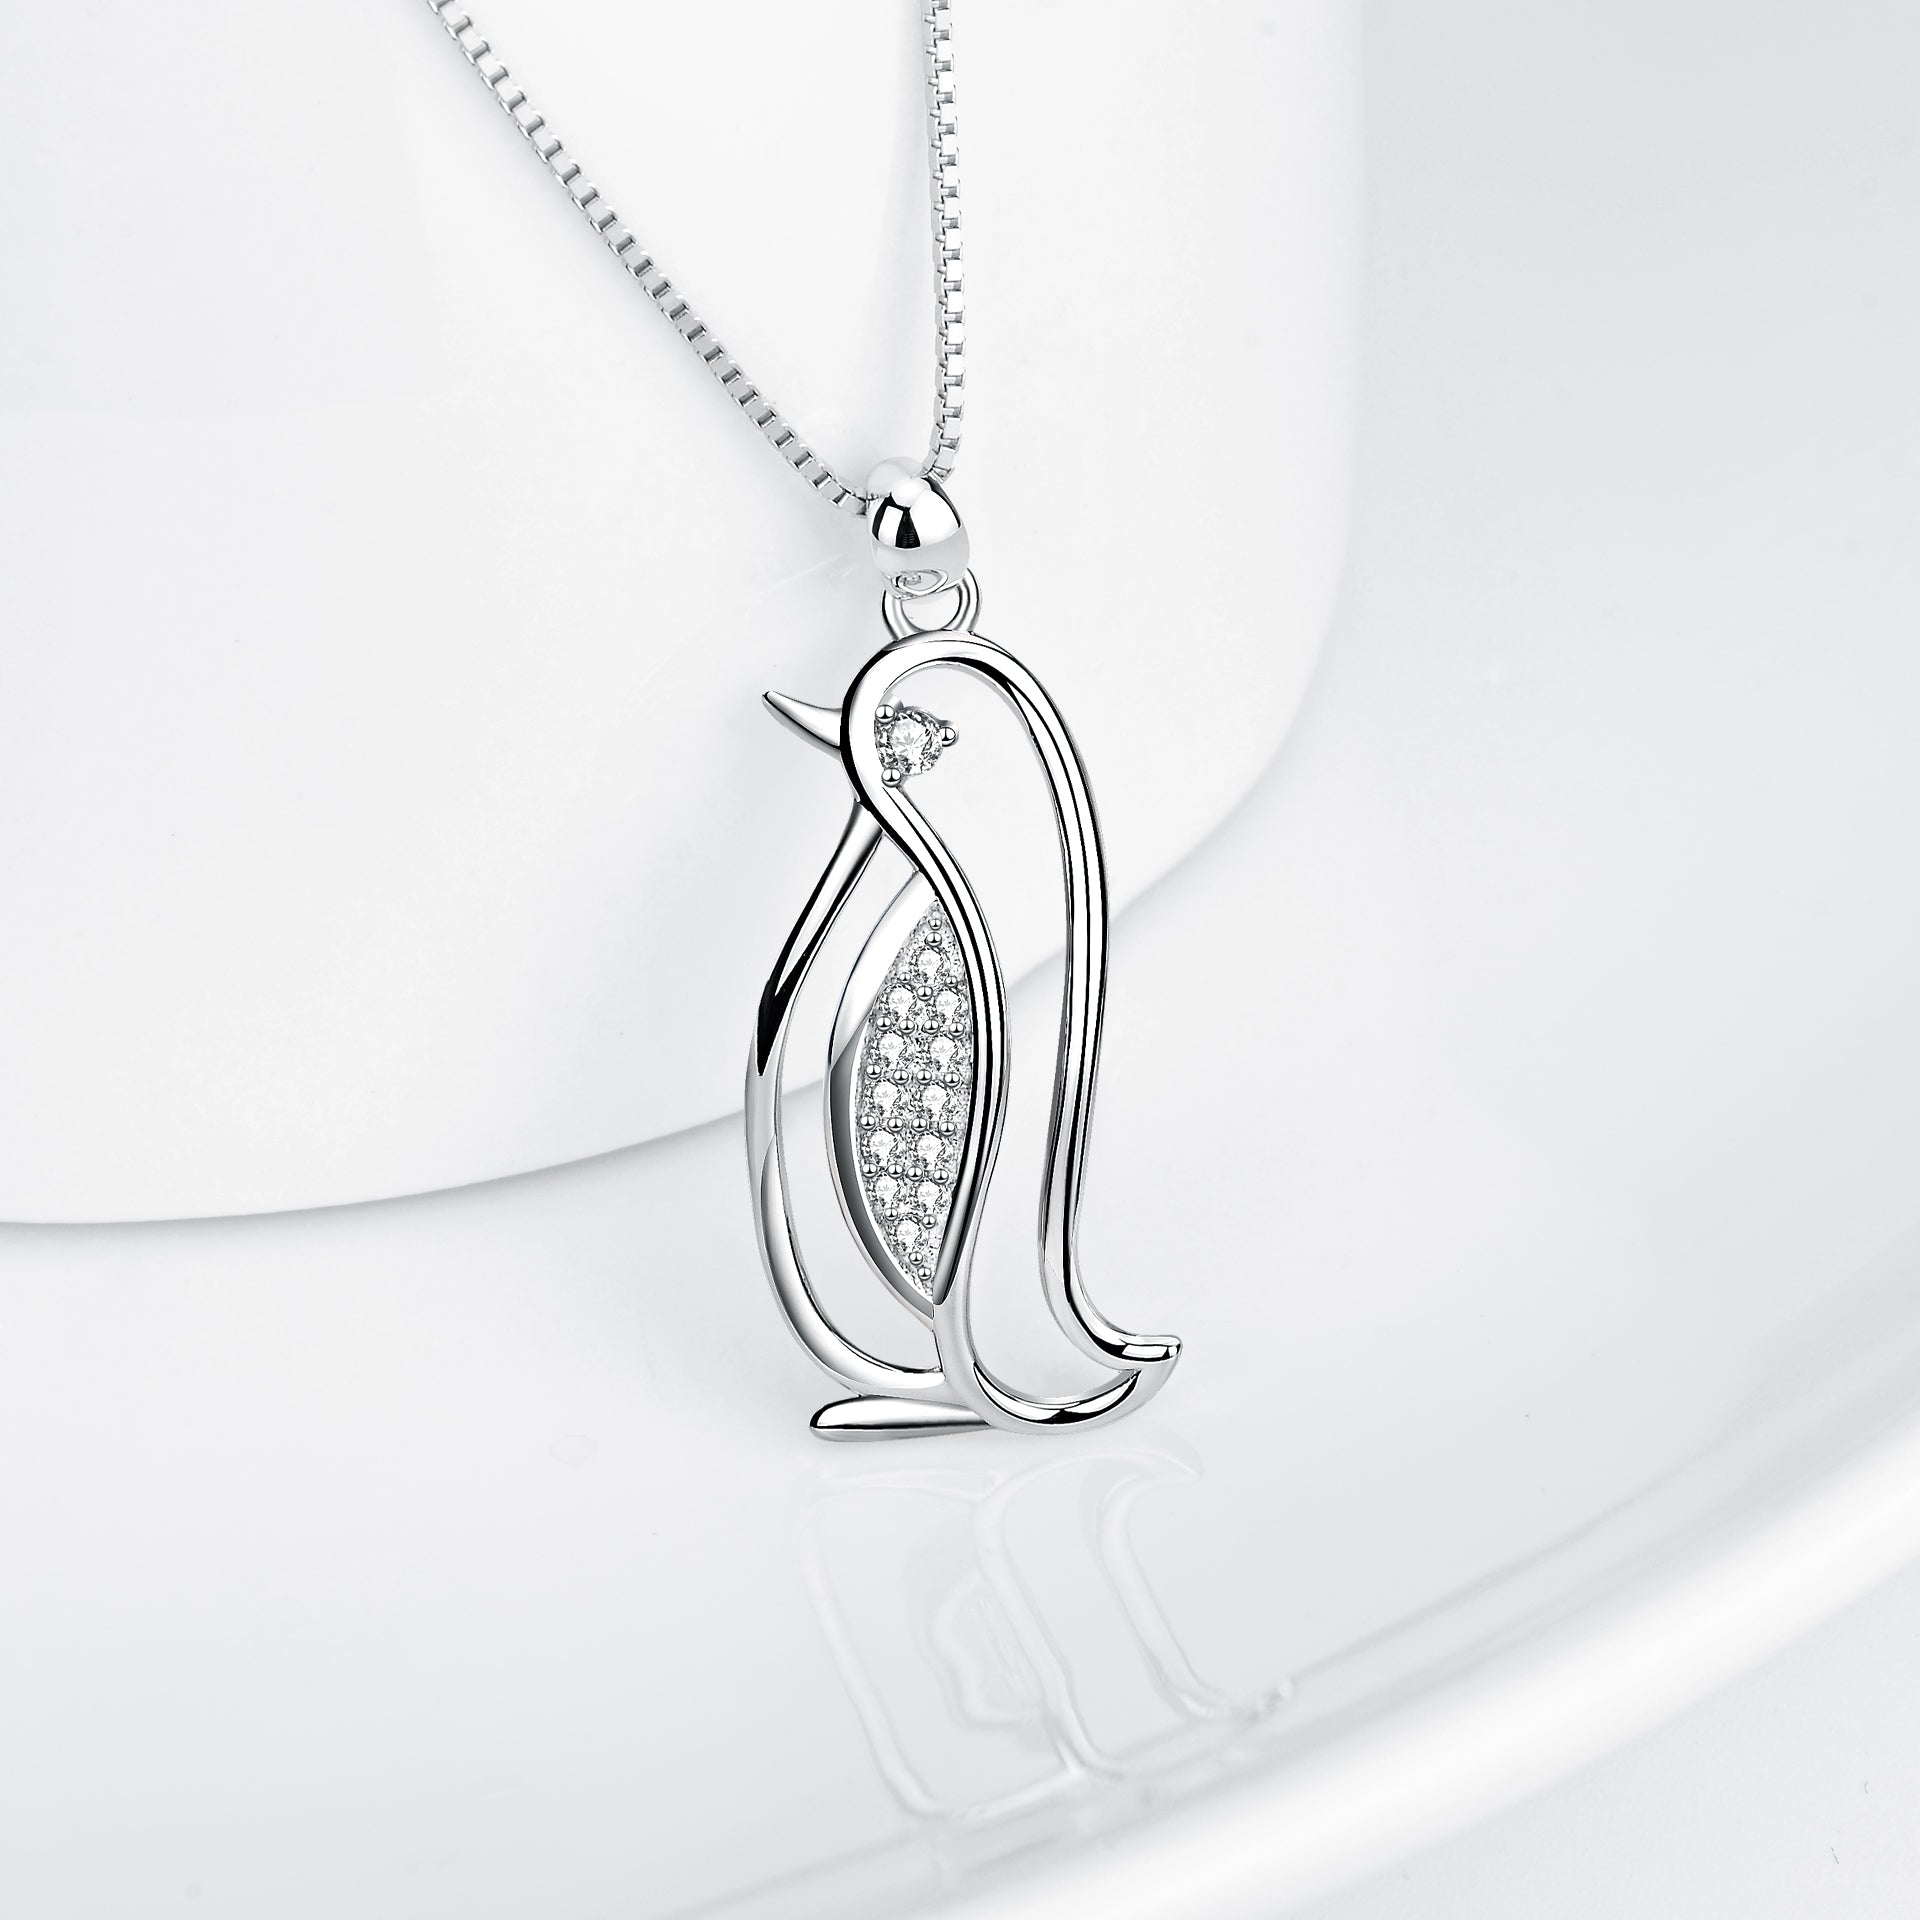 Pendant zirconia necklace cute animal shape jewelry penguin pendant necklace for girls